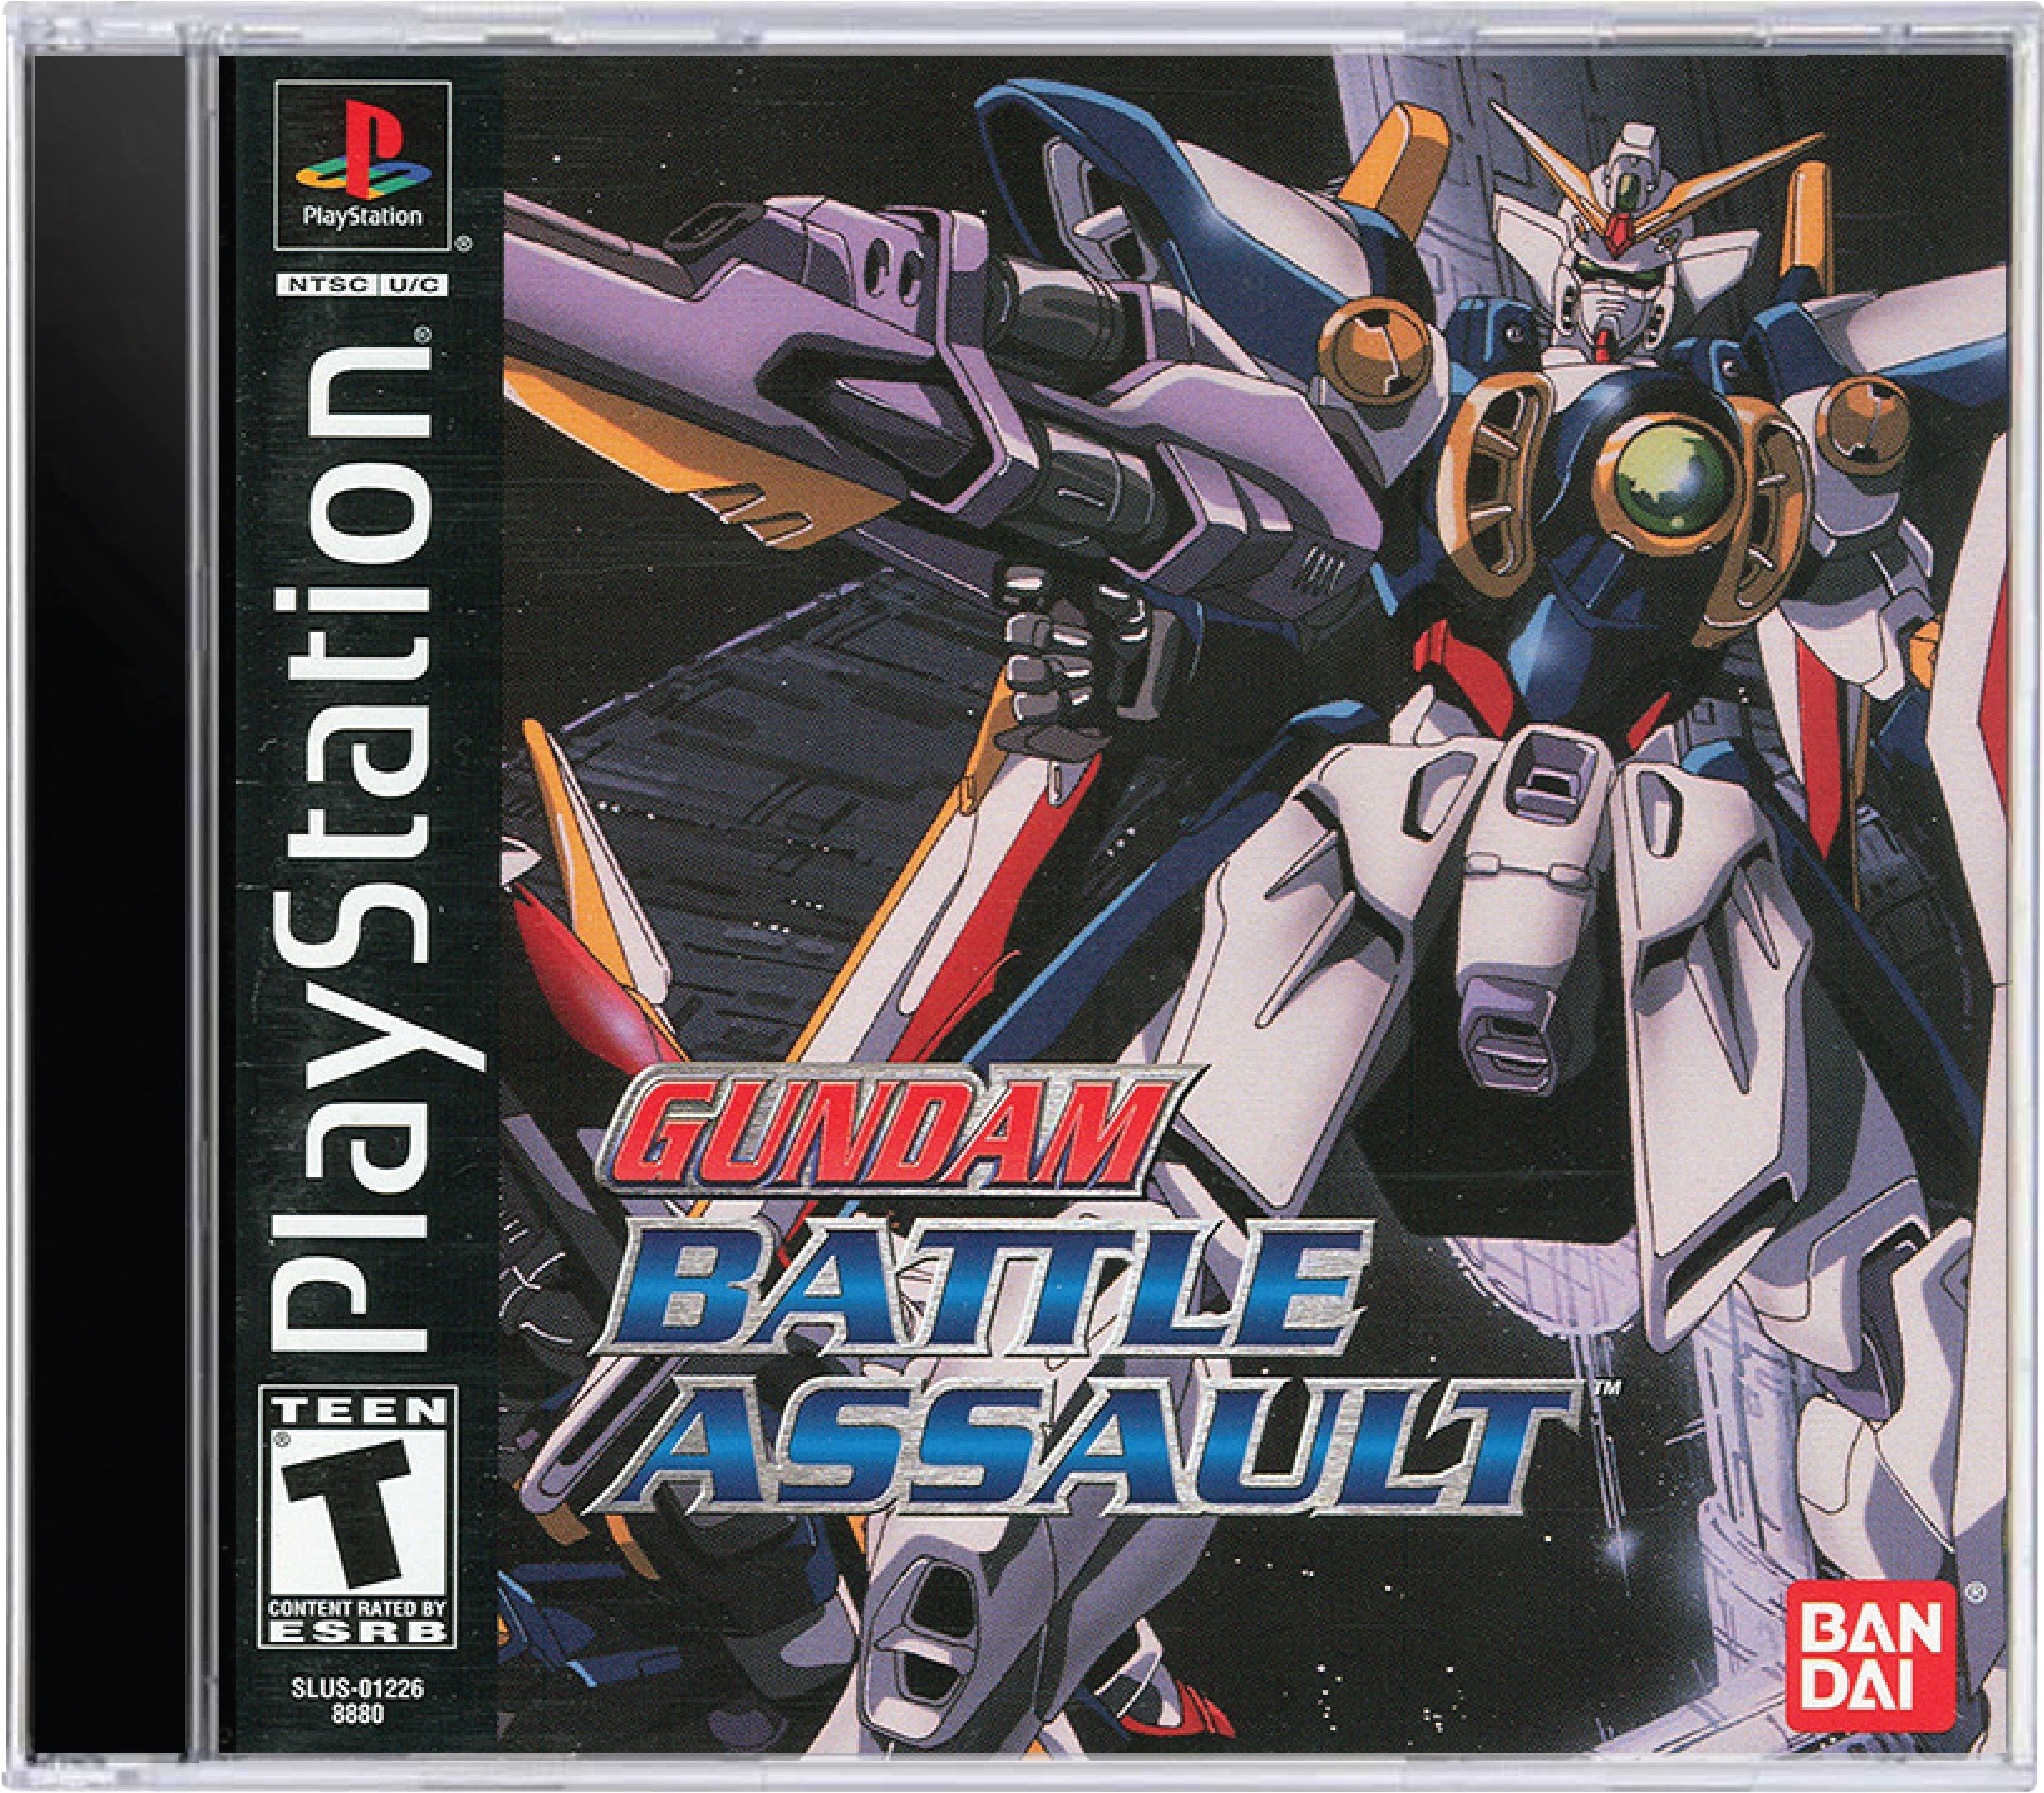 Gundam Battle Assault Cover Art and Product Photo